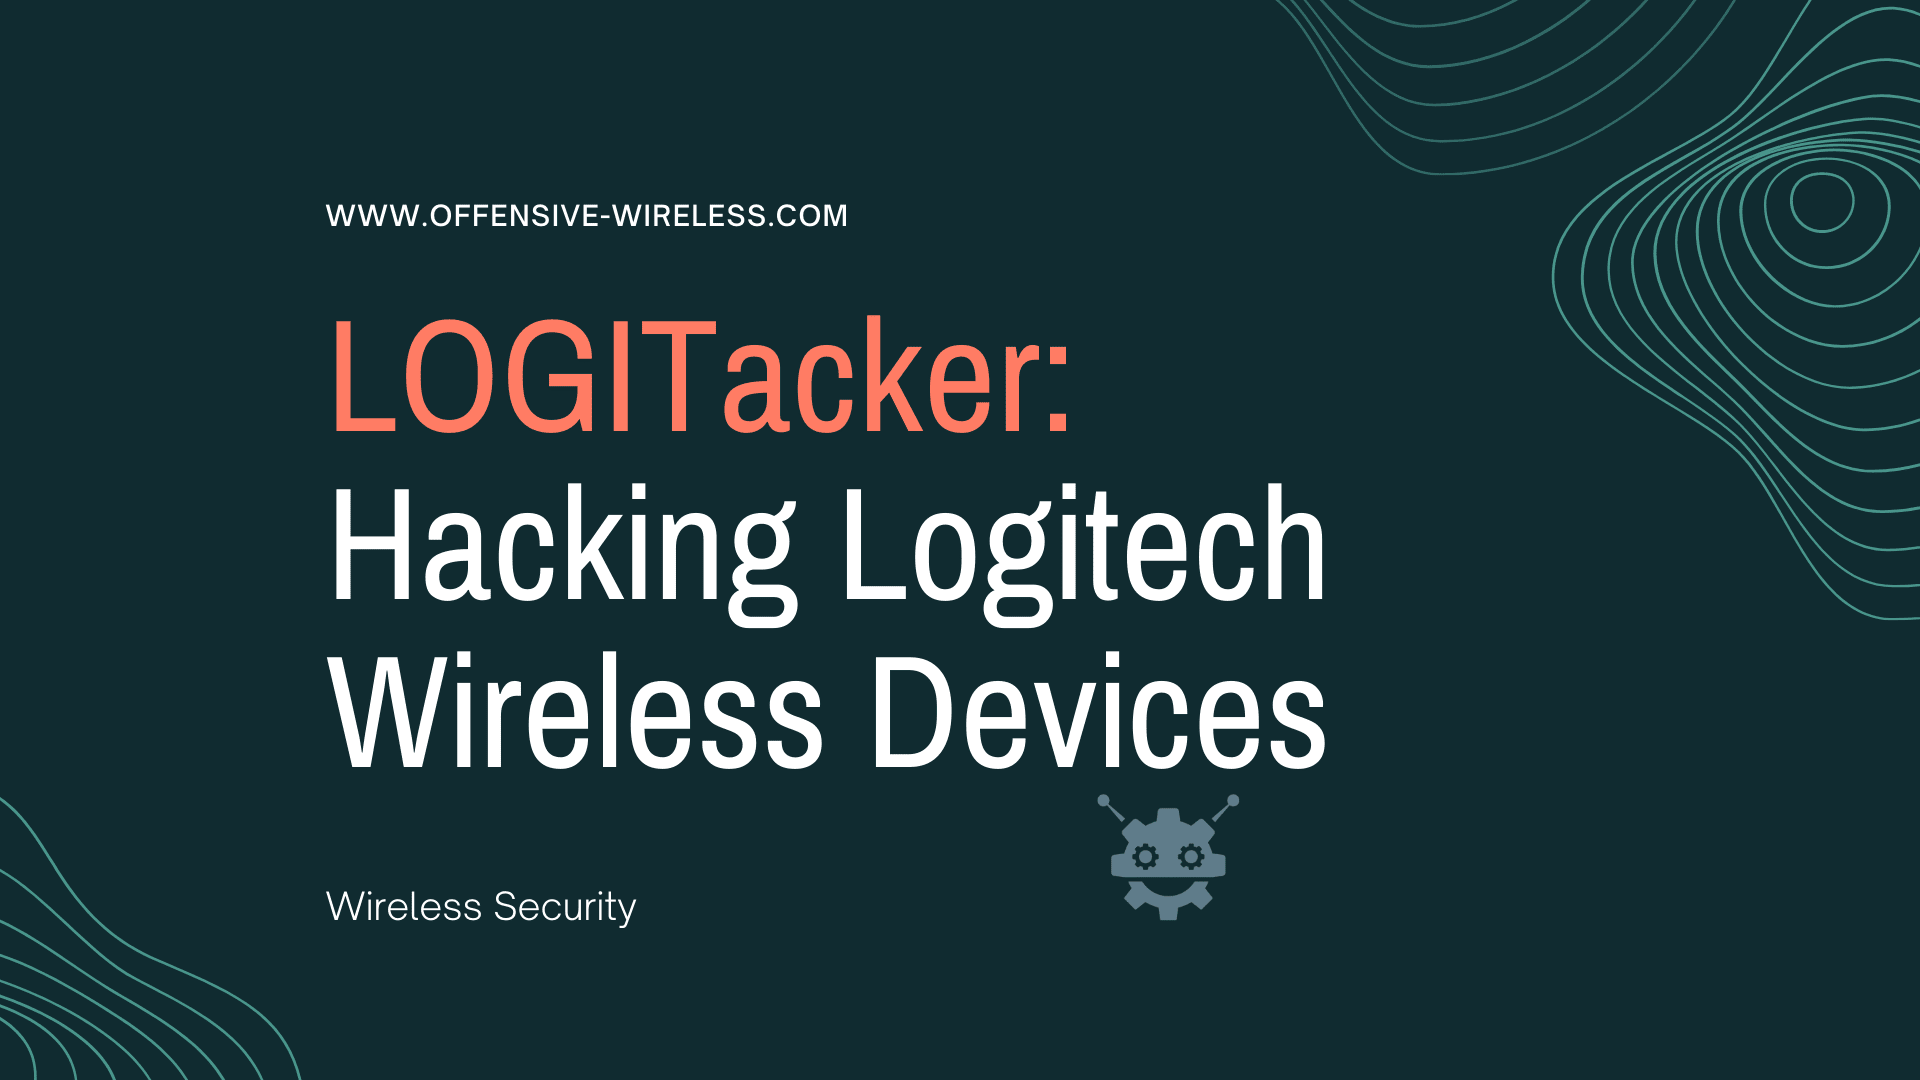 LOGITacker Hacking Logitech Wireless Devices